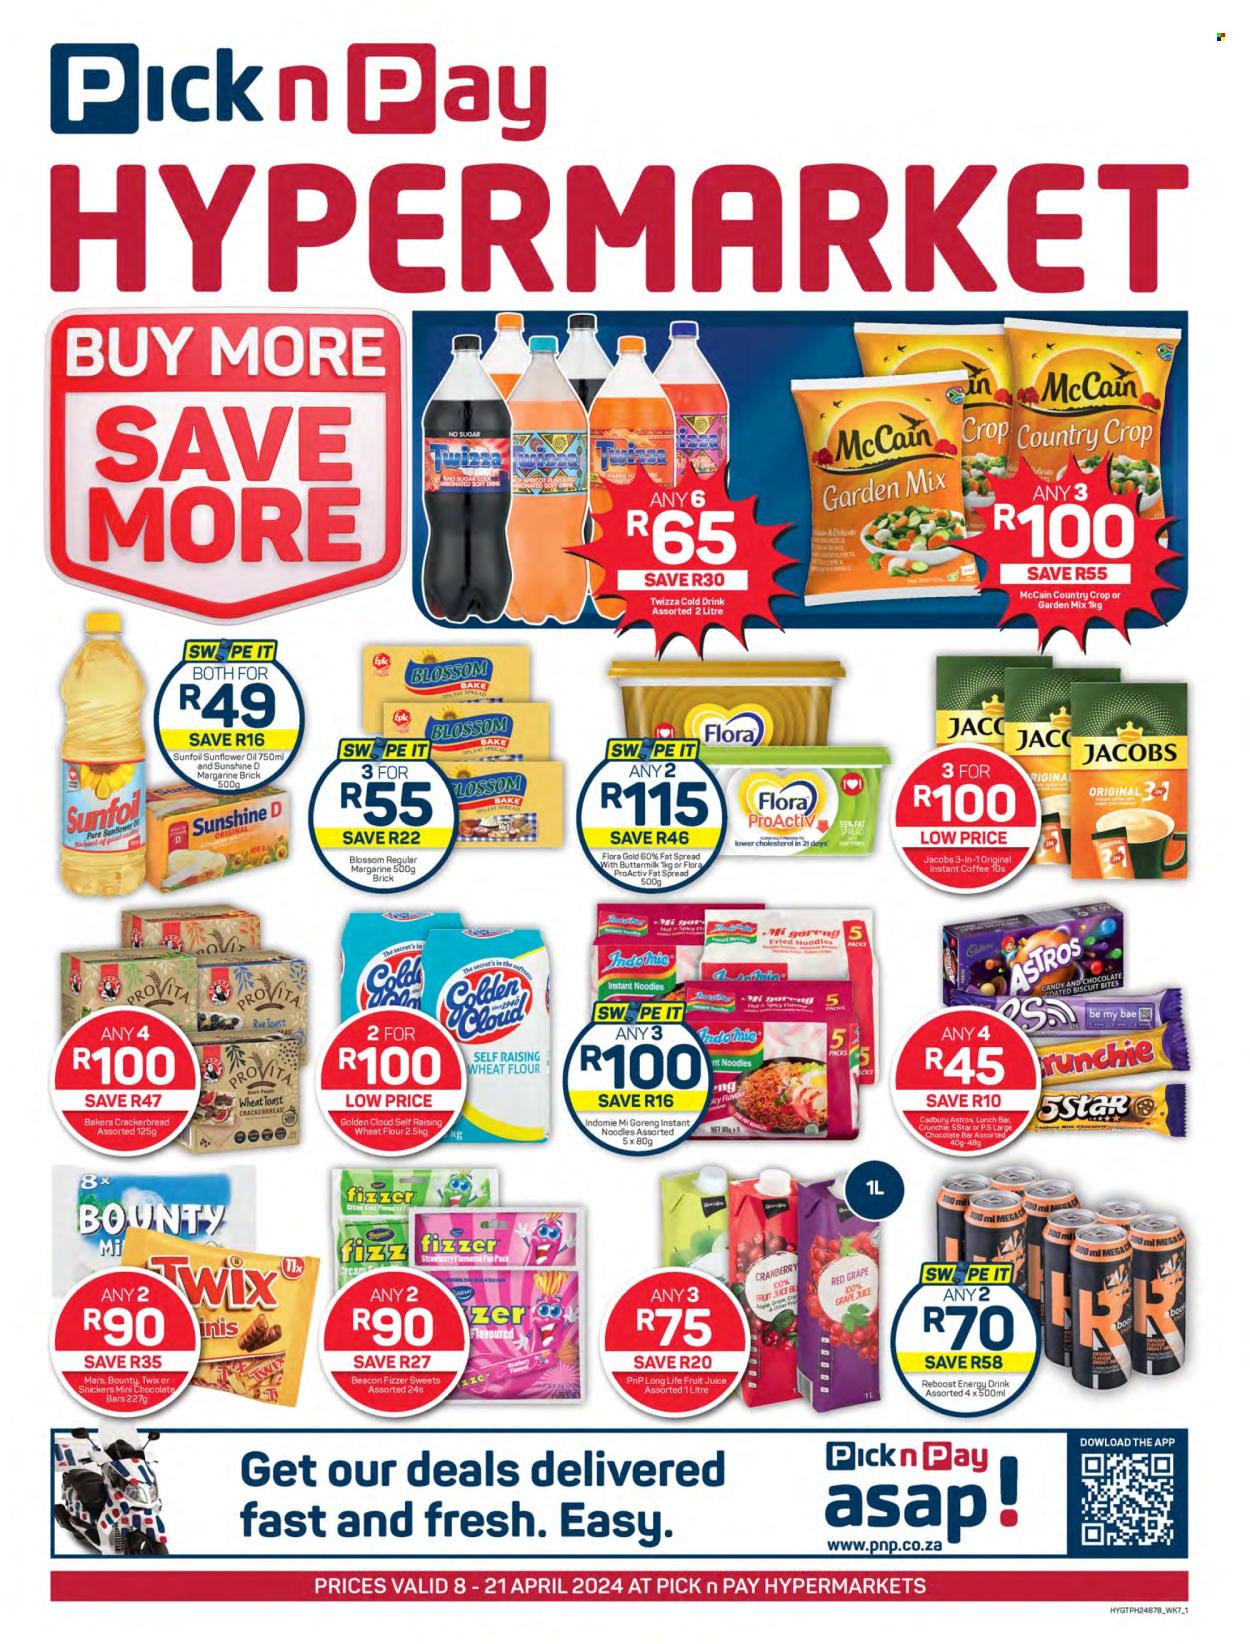 Pick n Pay Hypermarket specials - 04.08.2024 - 04.21.2024. 